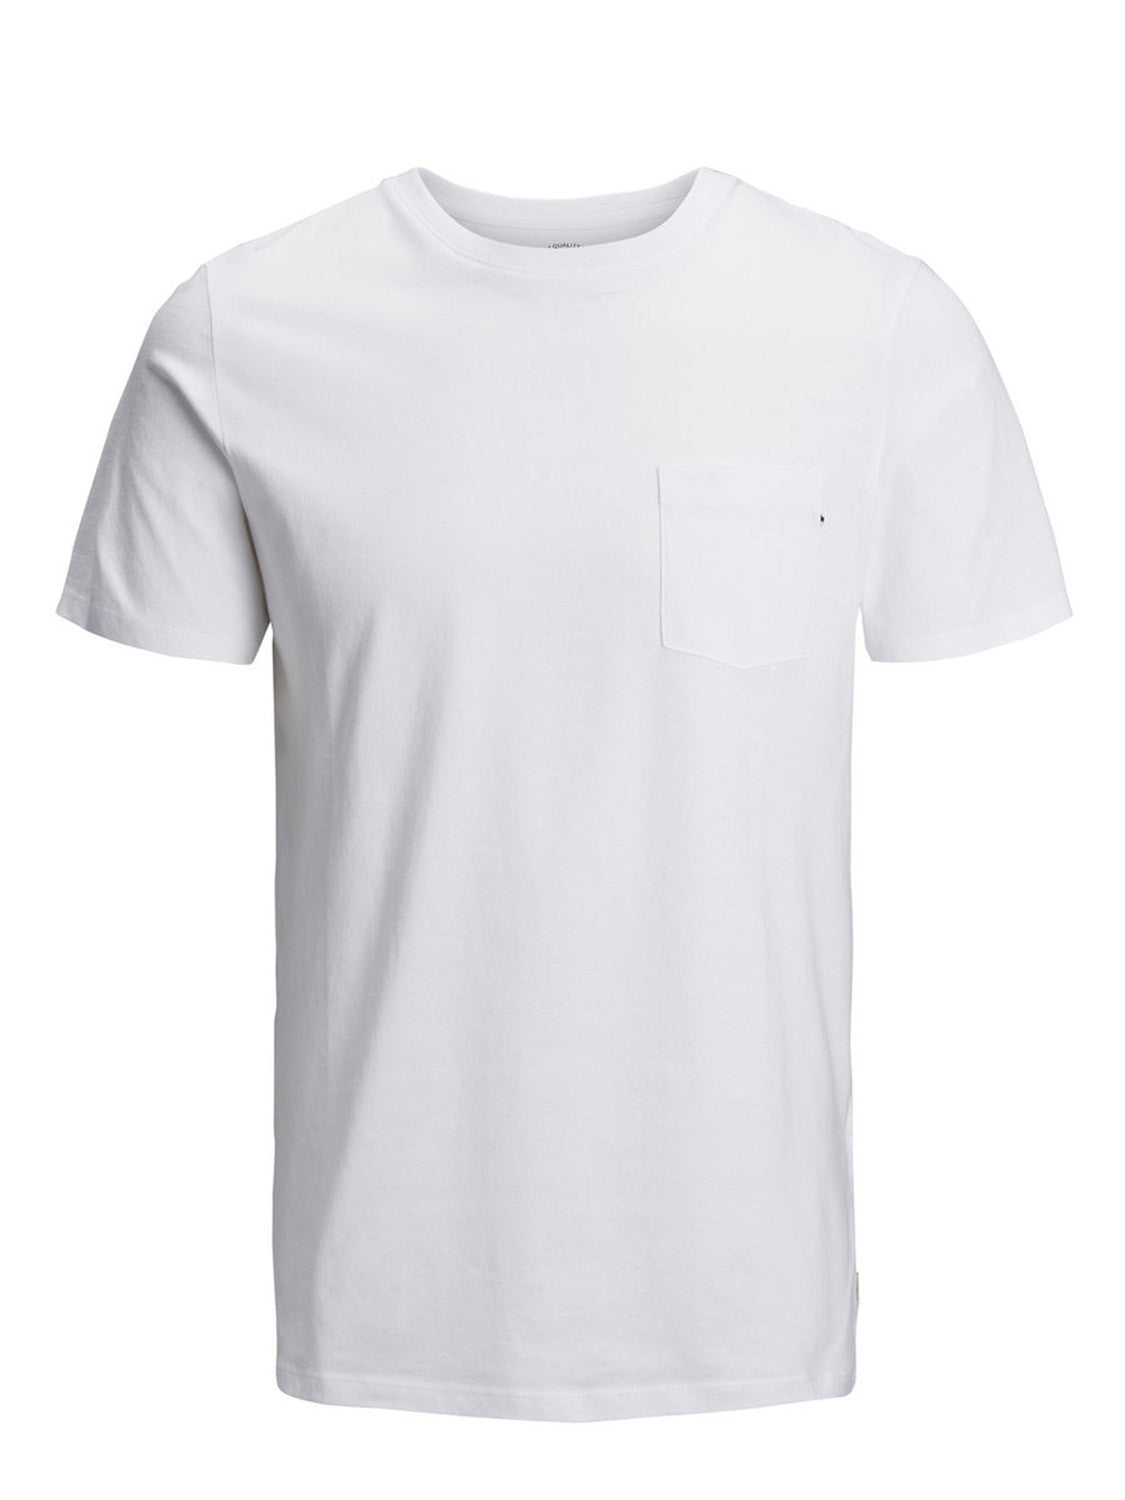 Jack Jones T-Shirt Uomo